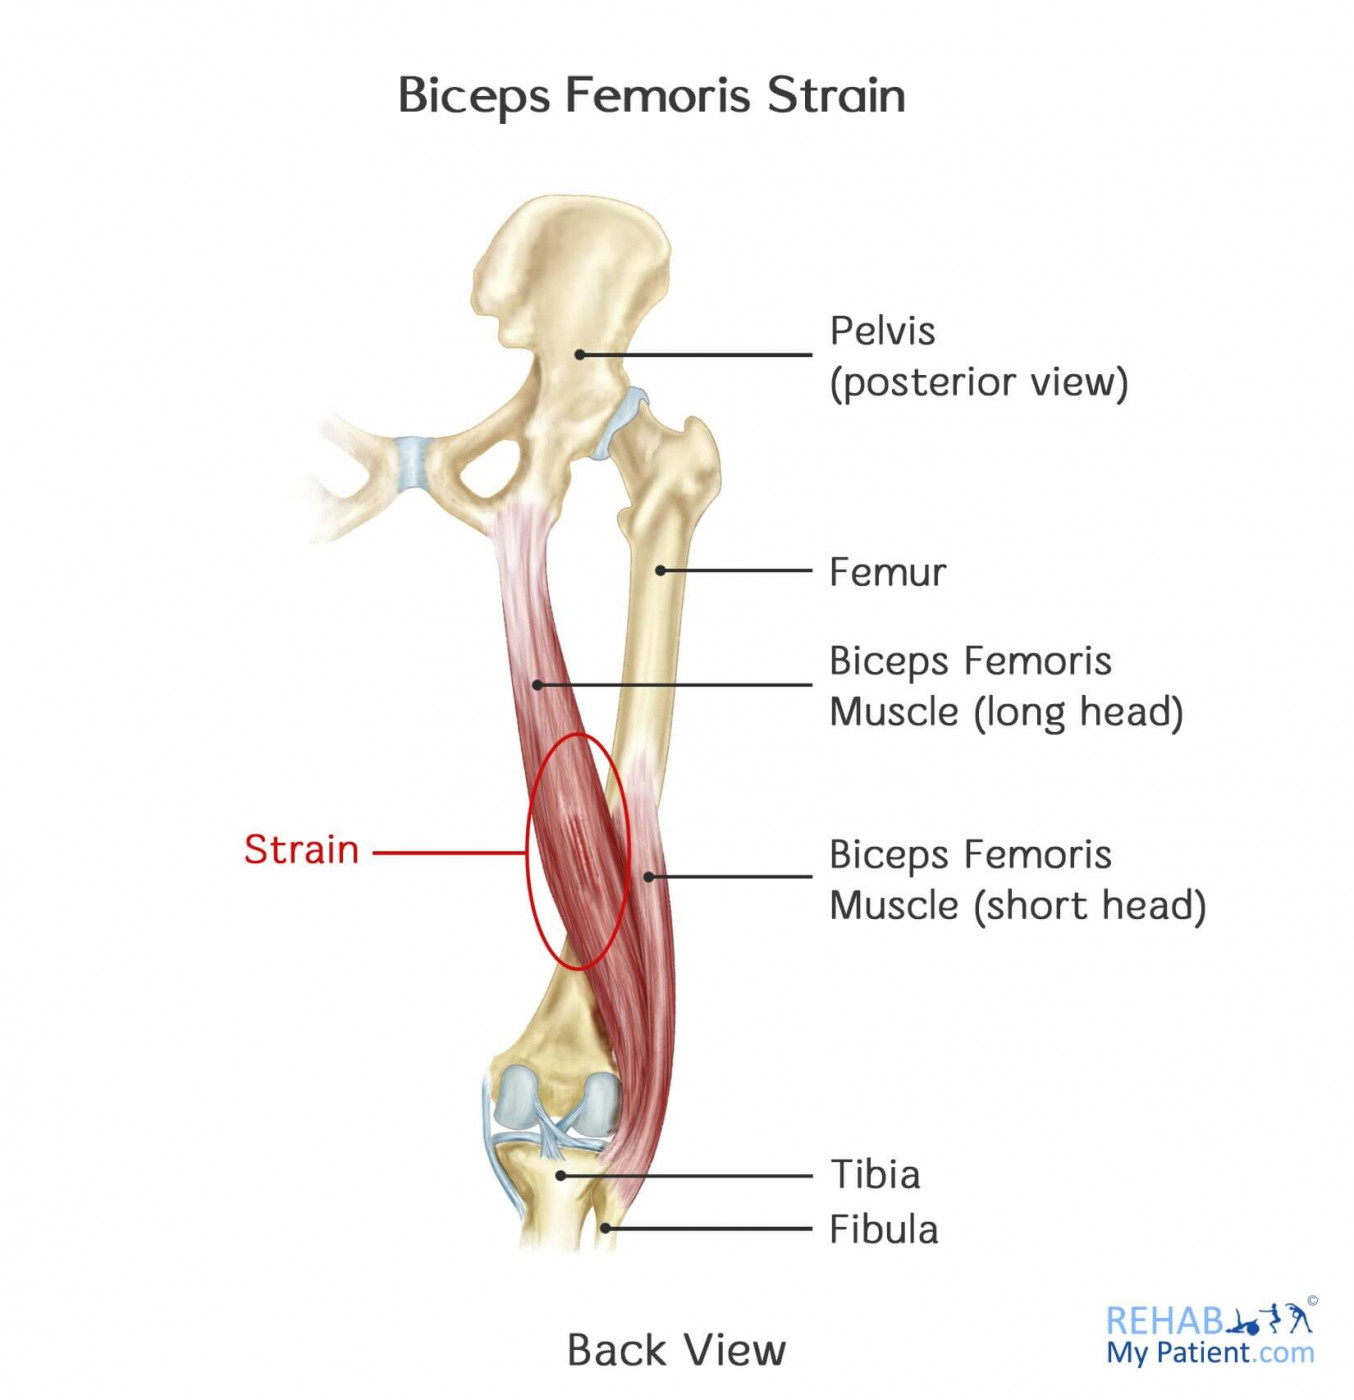 Biceps Femoris Strain